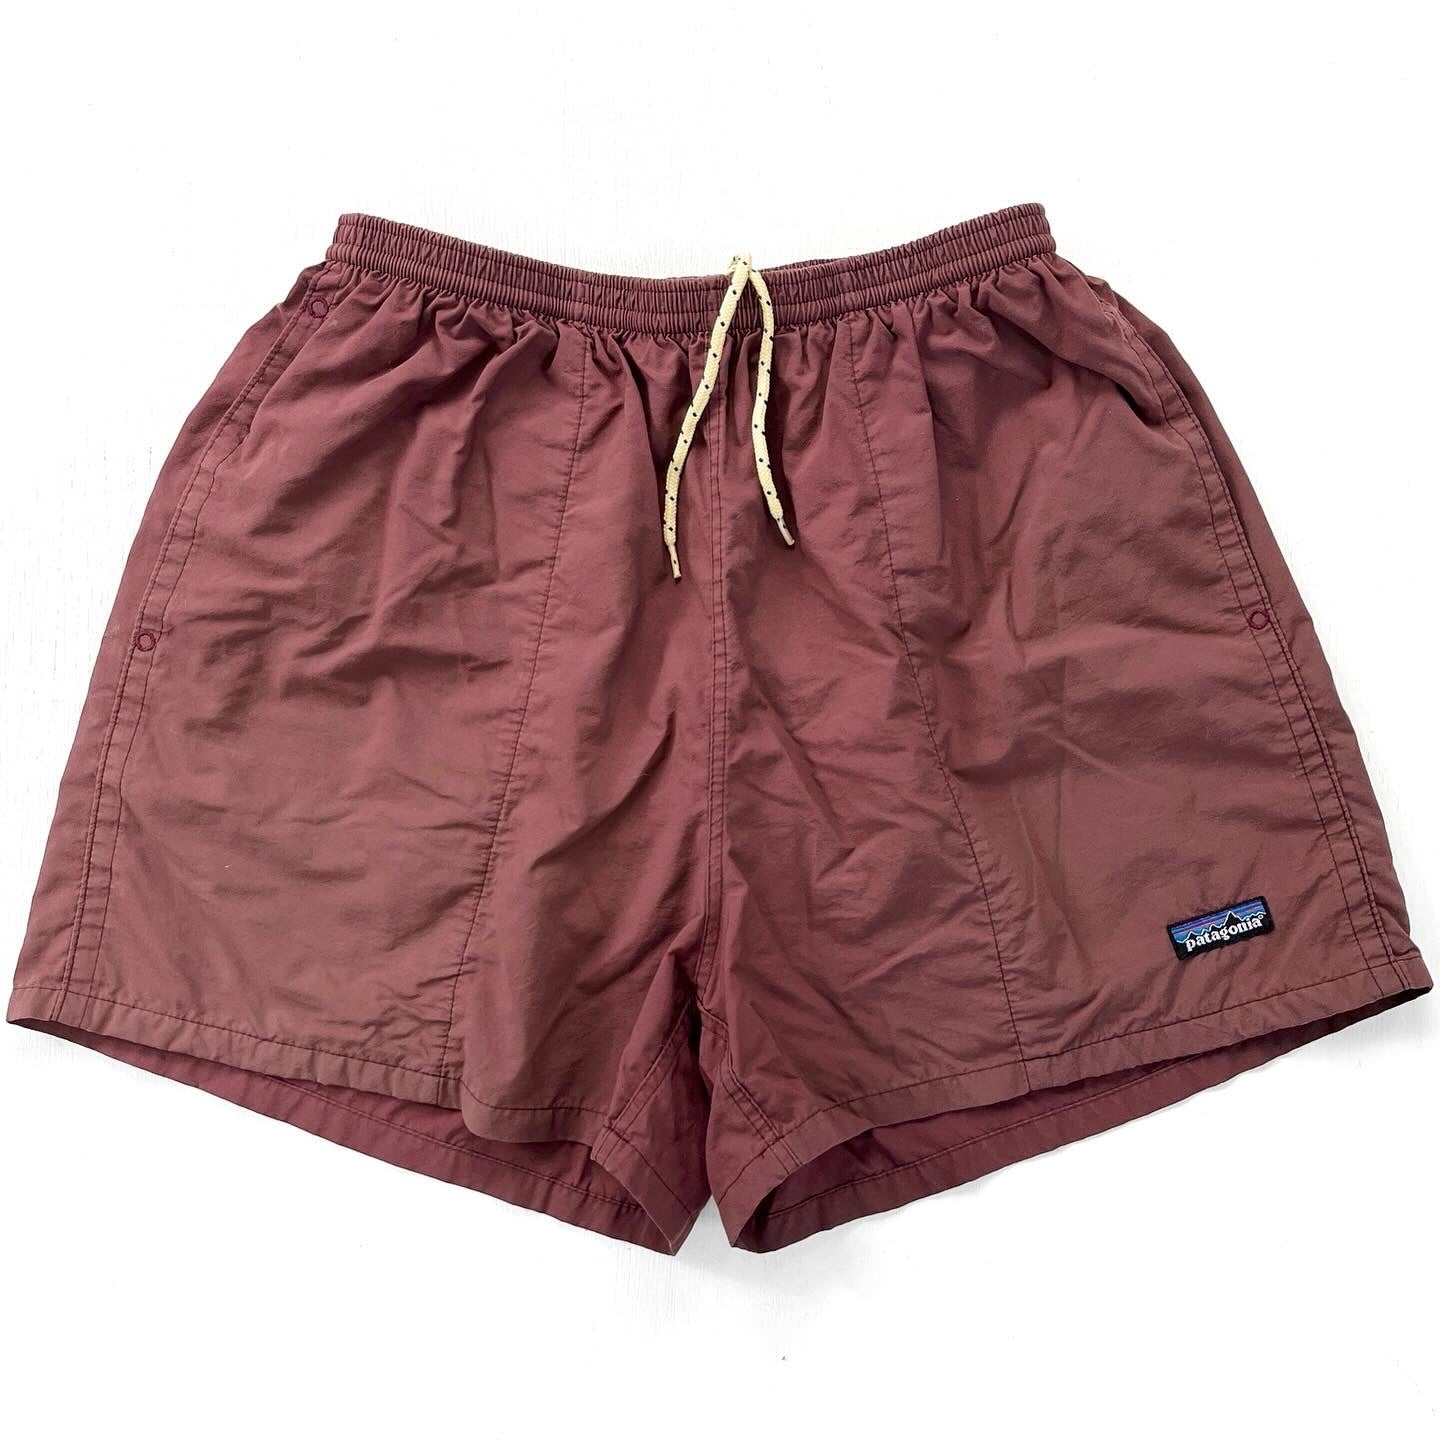 1999 Patagonia Mens 3.5” Nylon Baggies Shorts, Light Raisin (M)